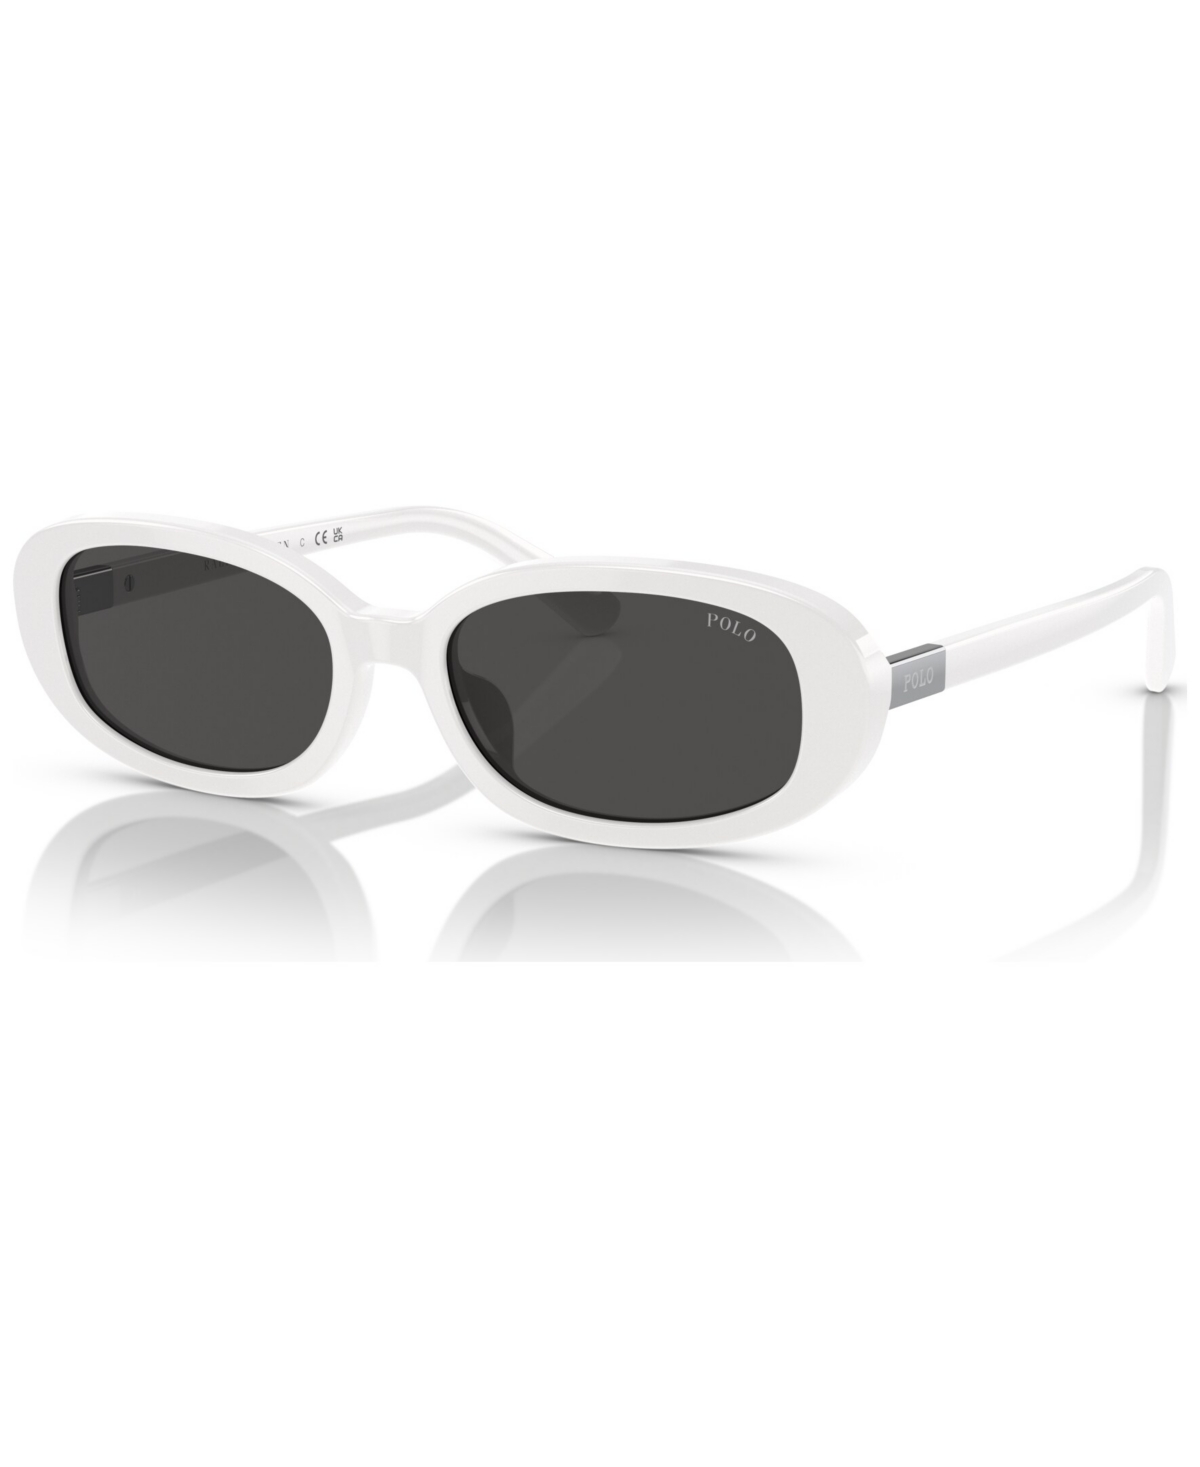 Polo Ralph Lauren Women's Sunglasses, Ph4198u In Shiny White